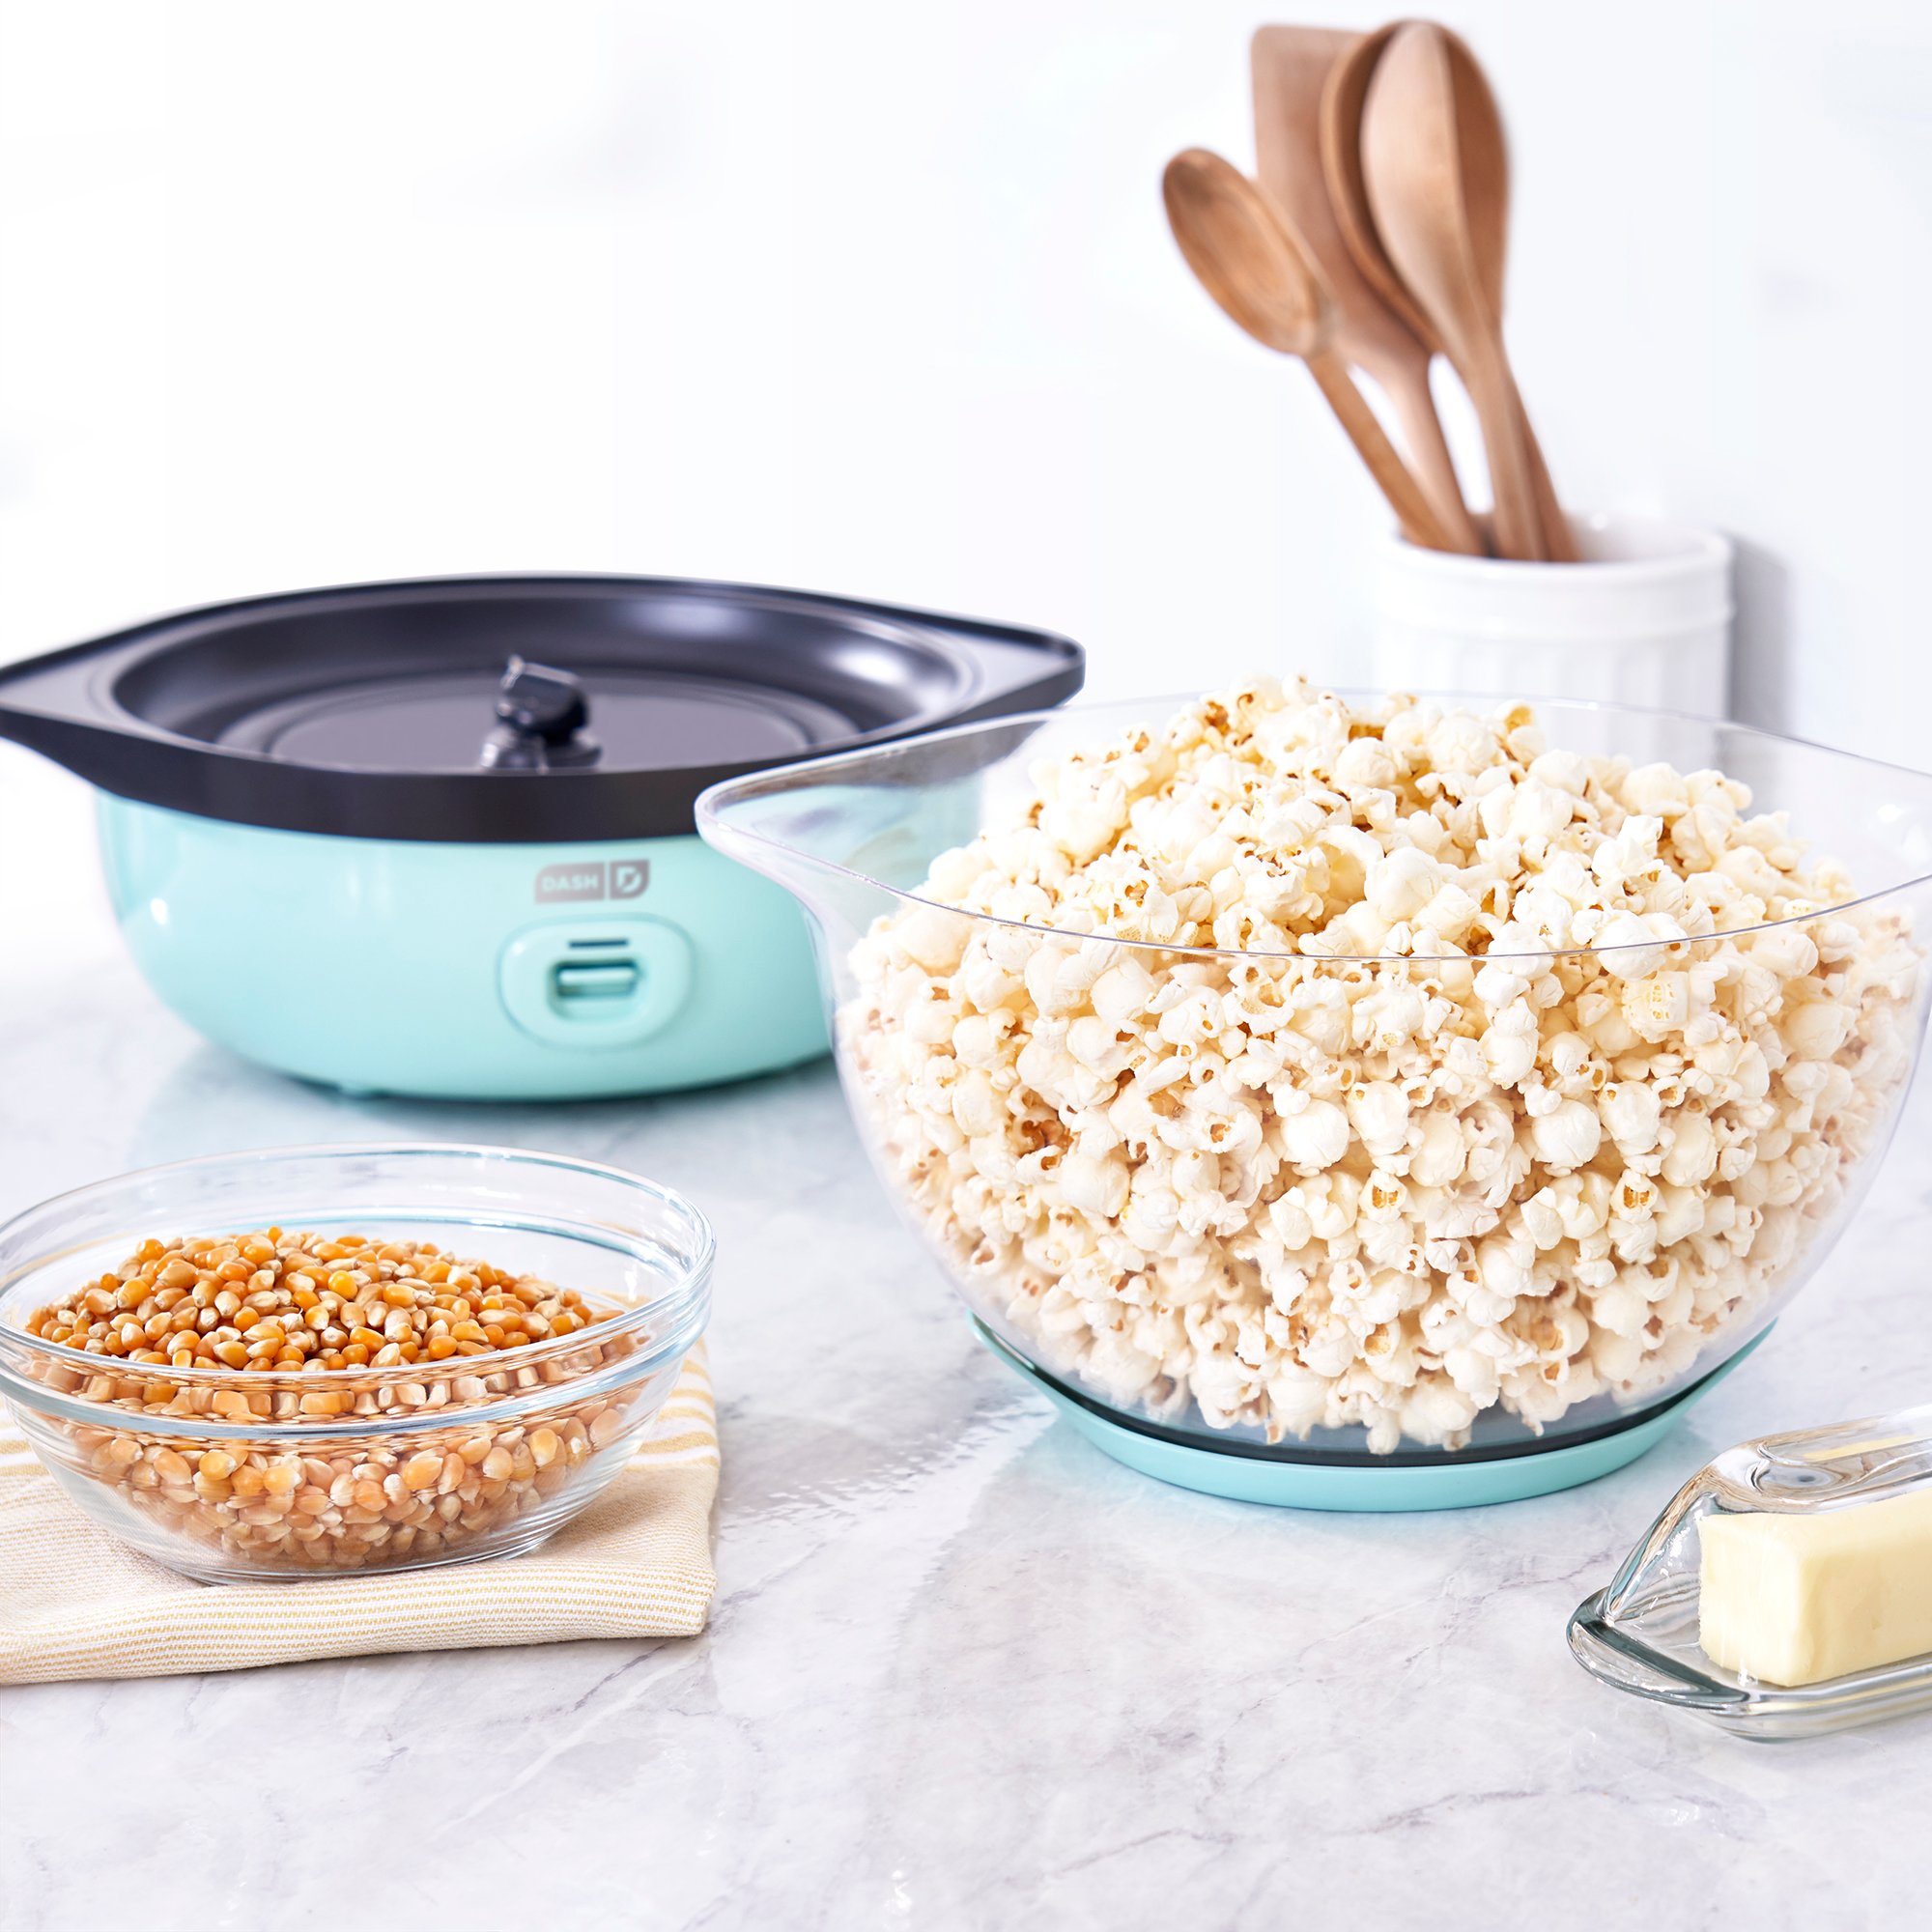 DASH, How to use Dash popcorn maker